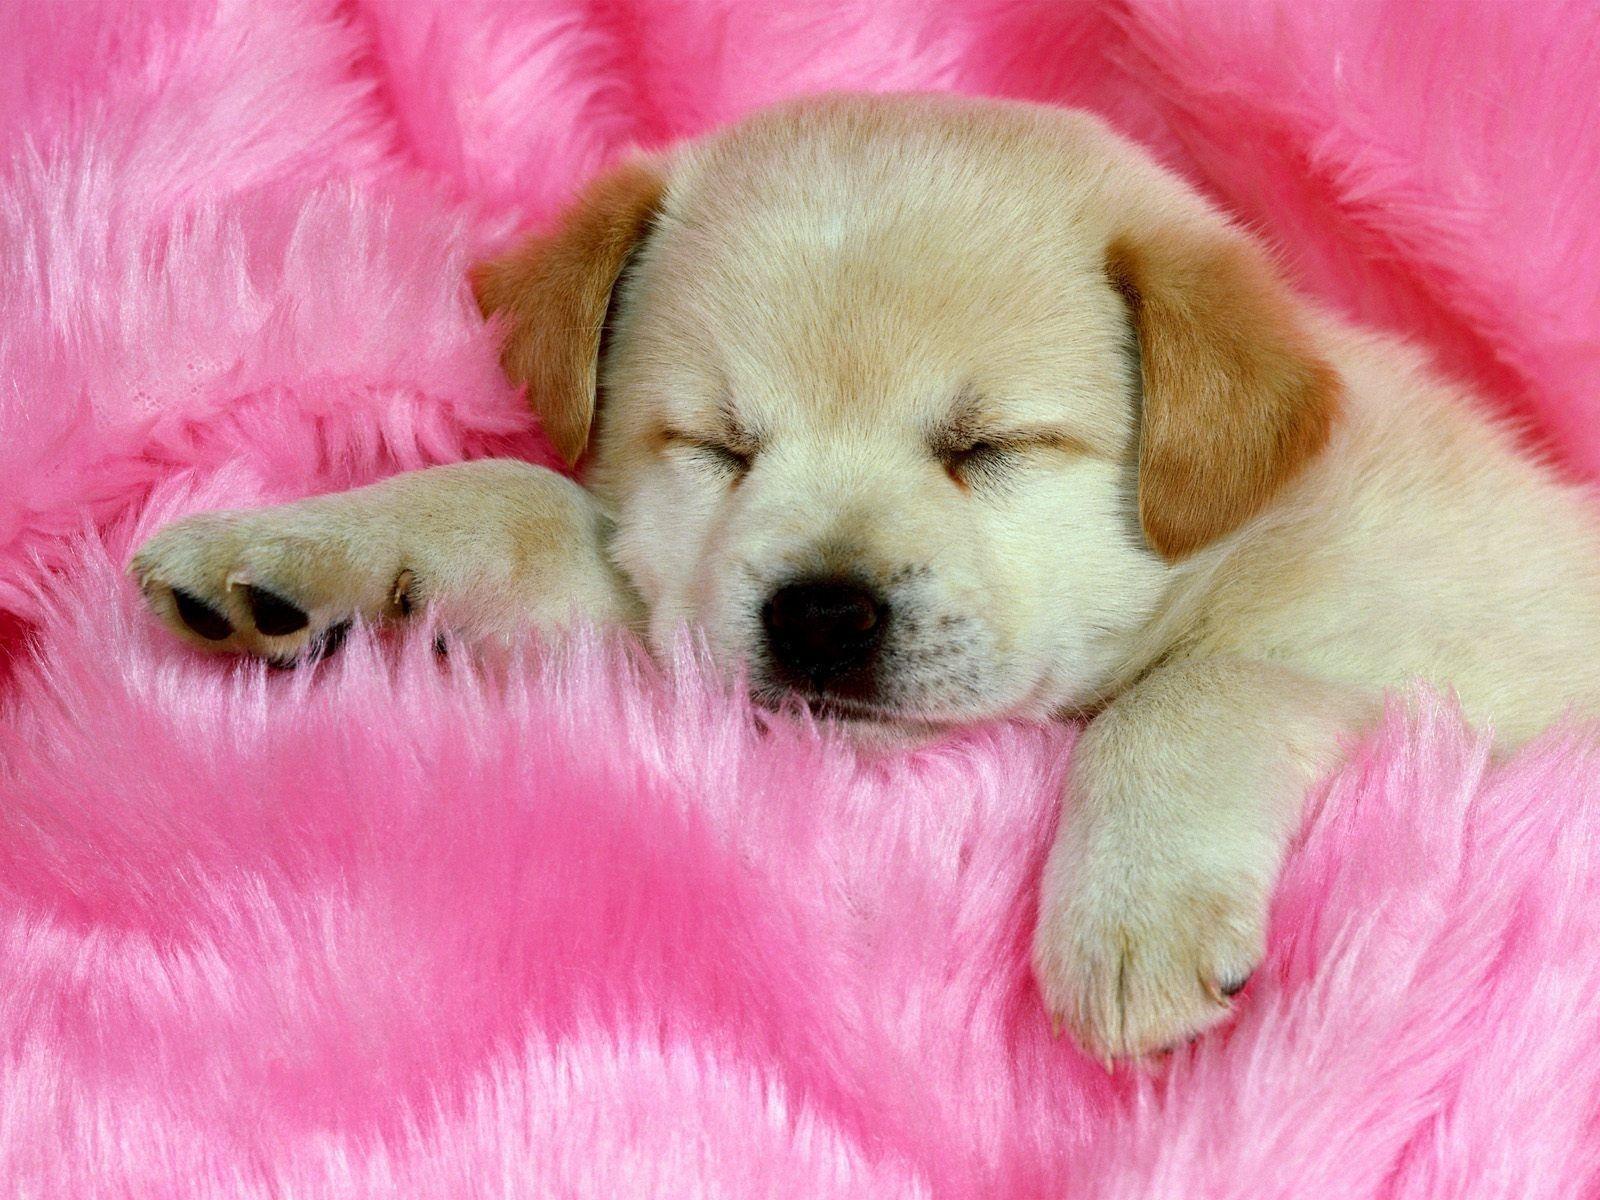 Cute Dogs Sleeping Wallpapers - Top Free Cute Dogs Sleeping ...